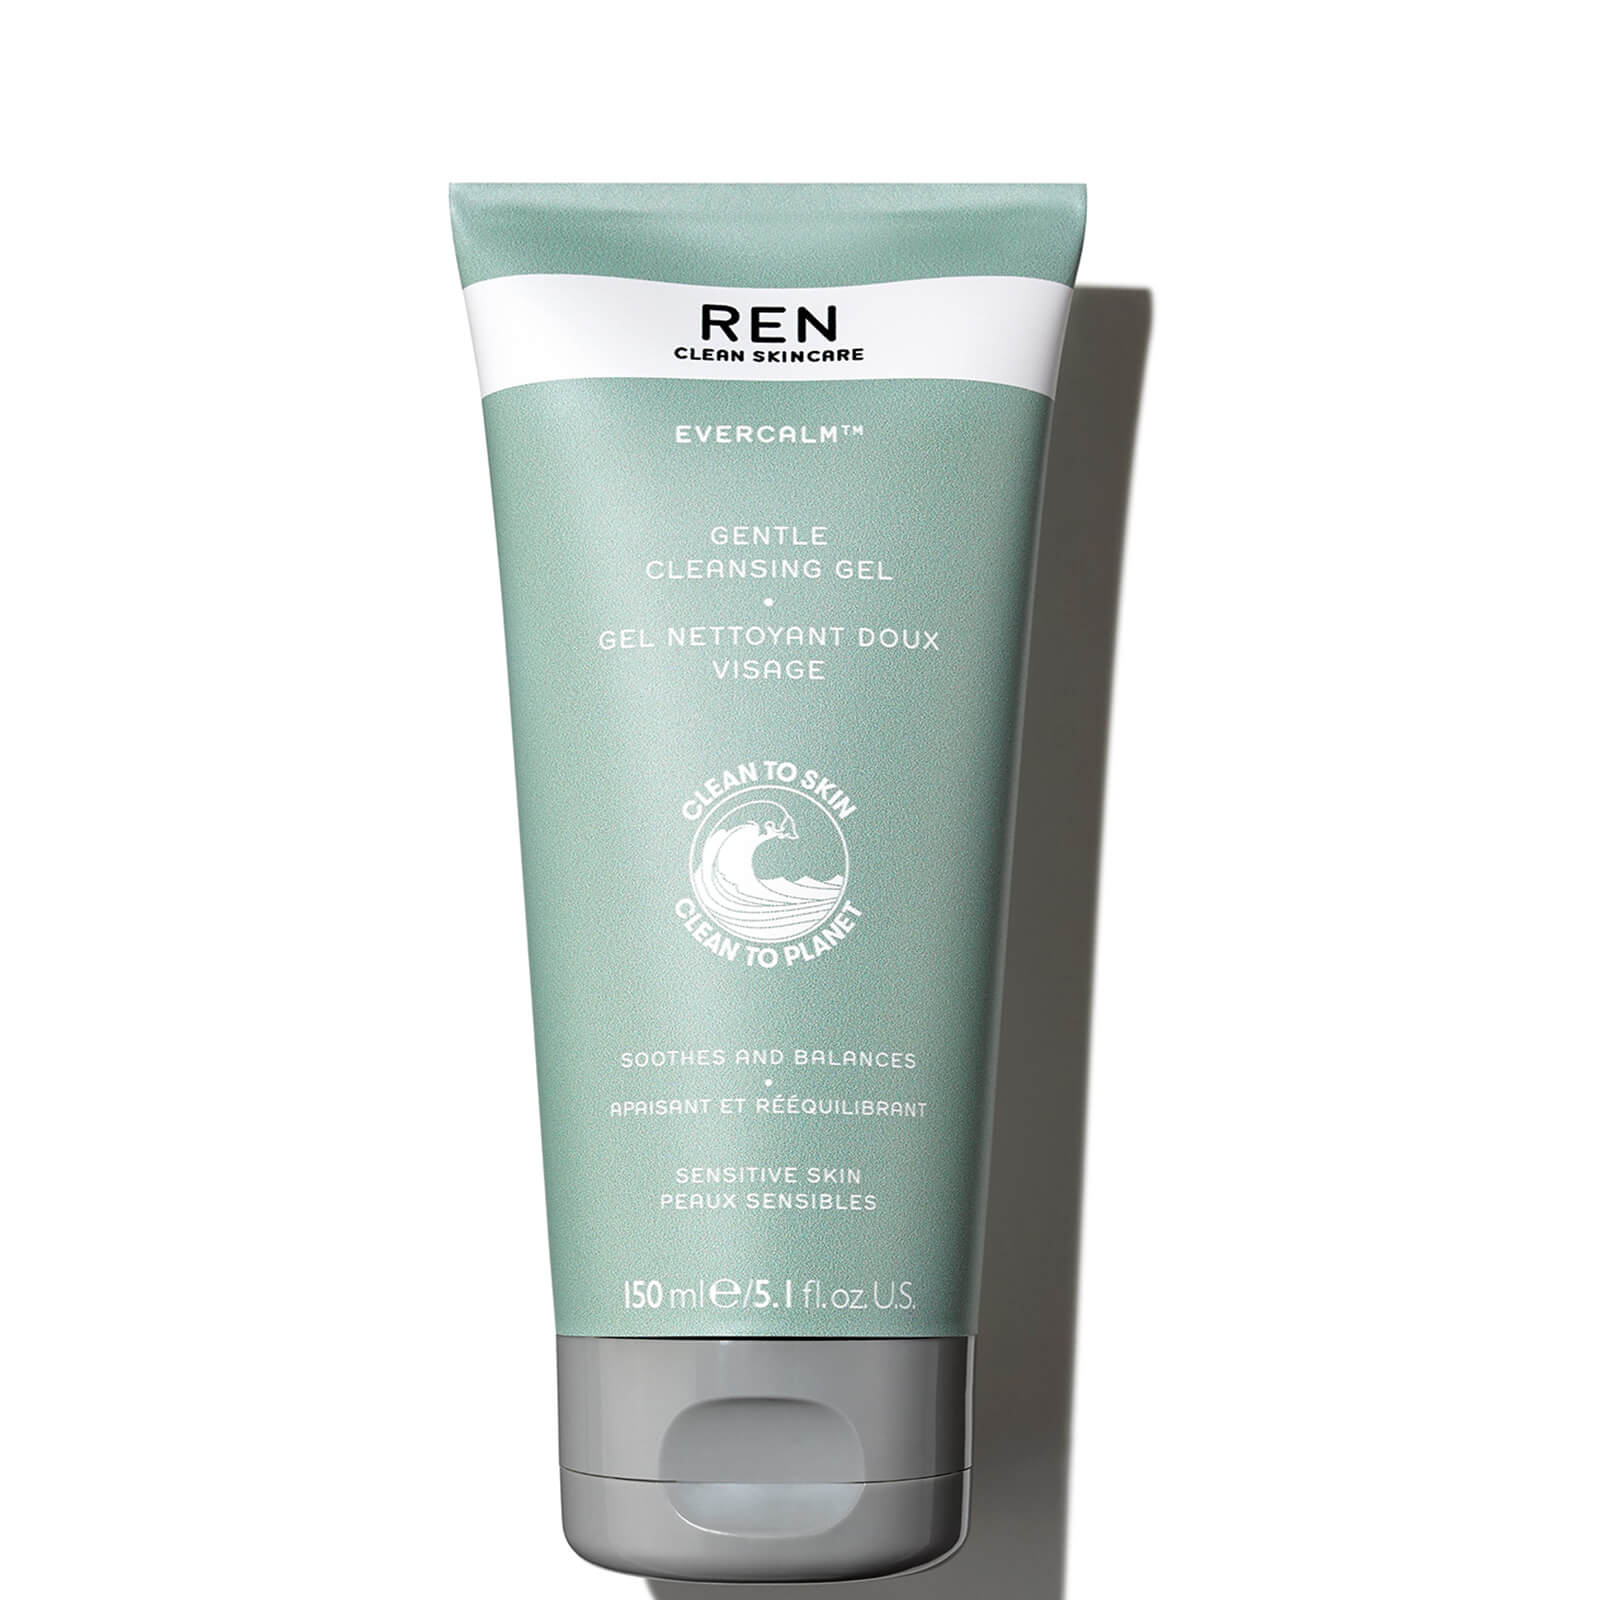 ren clean skincare evercalm gentle cleansing gel 150ml